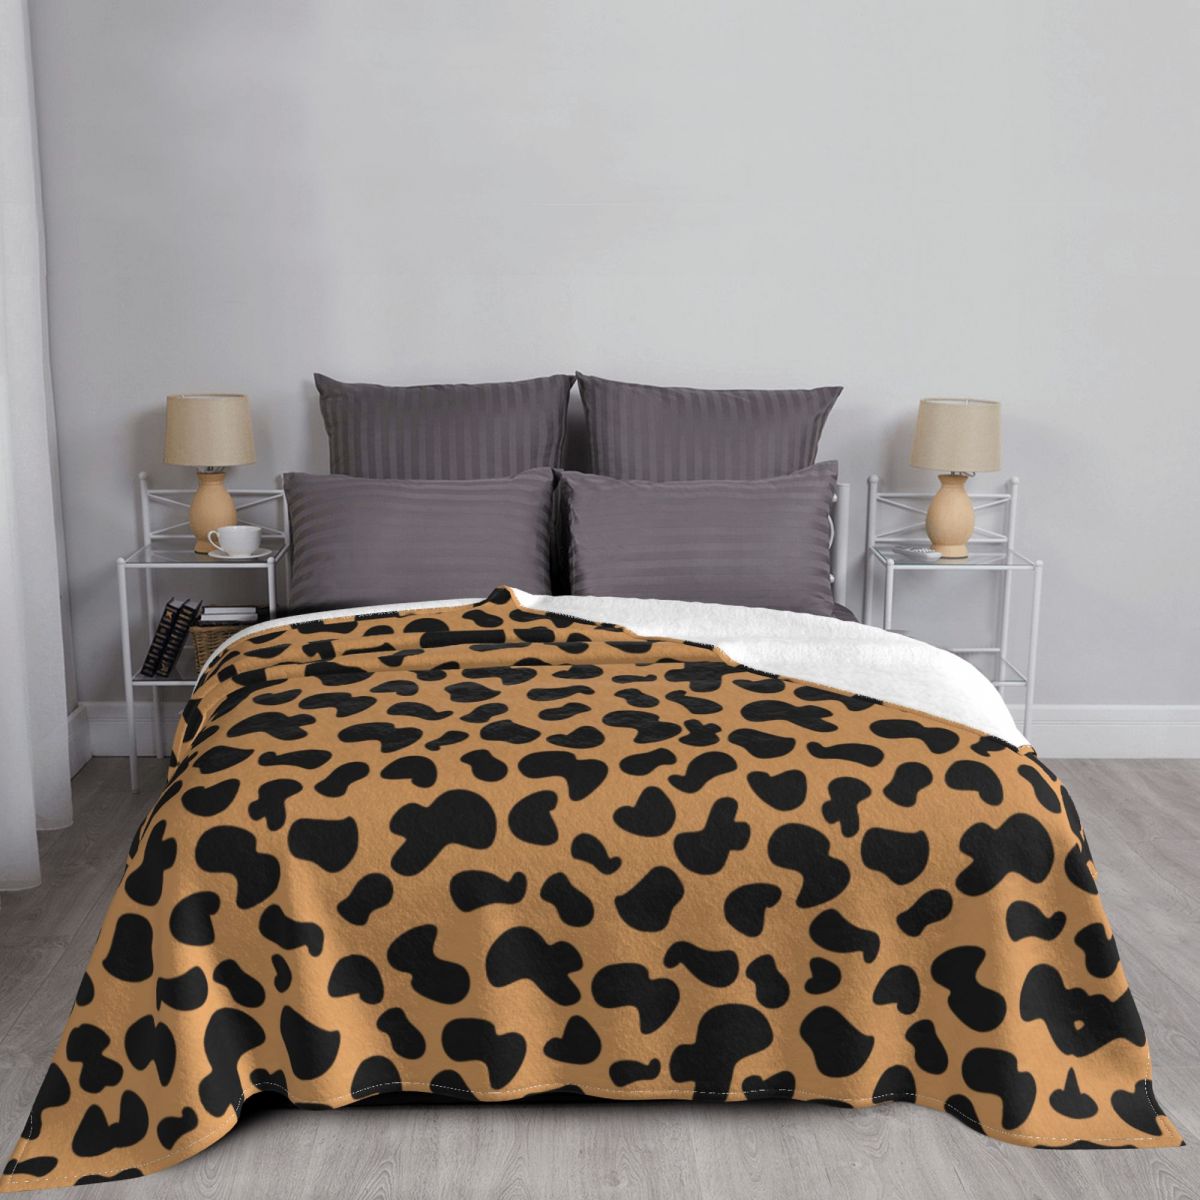 Animal Skin Texture Ultra-Soft Leopard Print Blankets